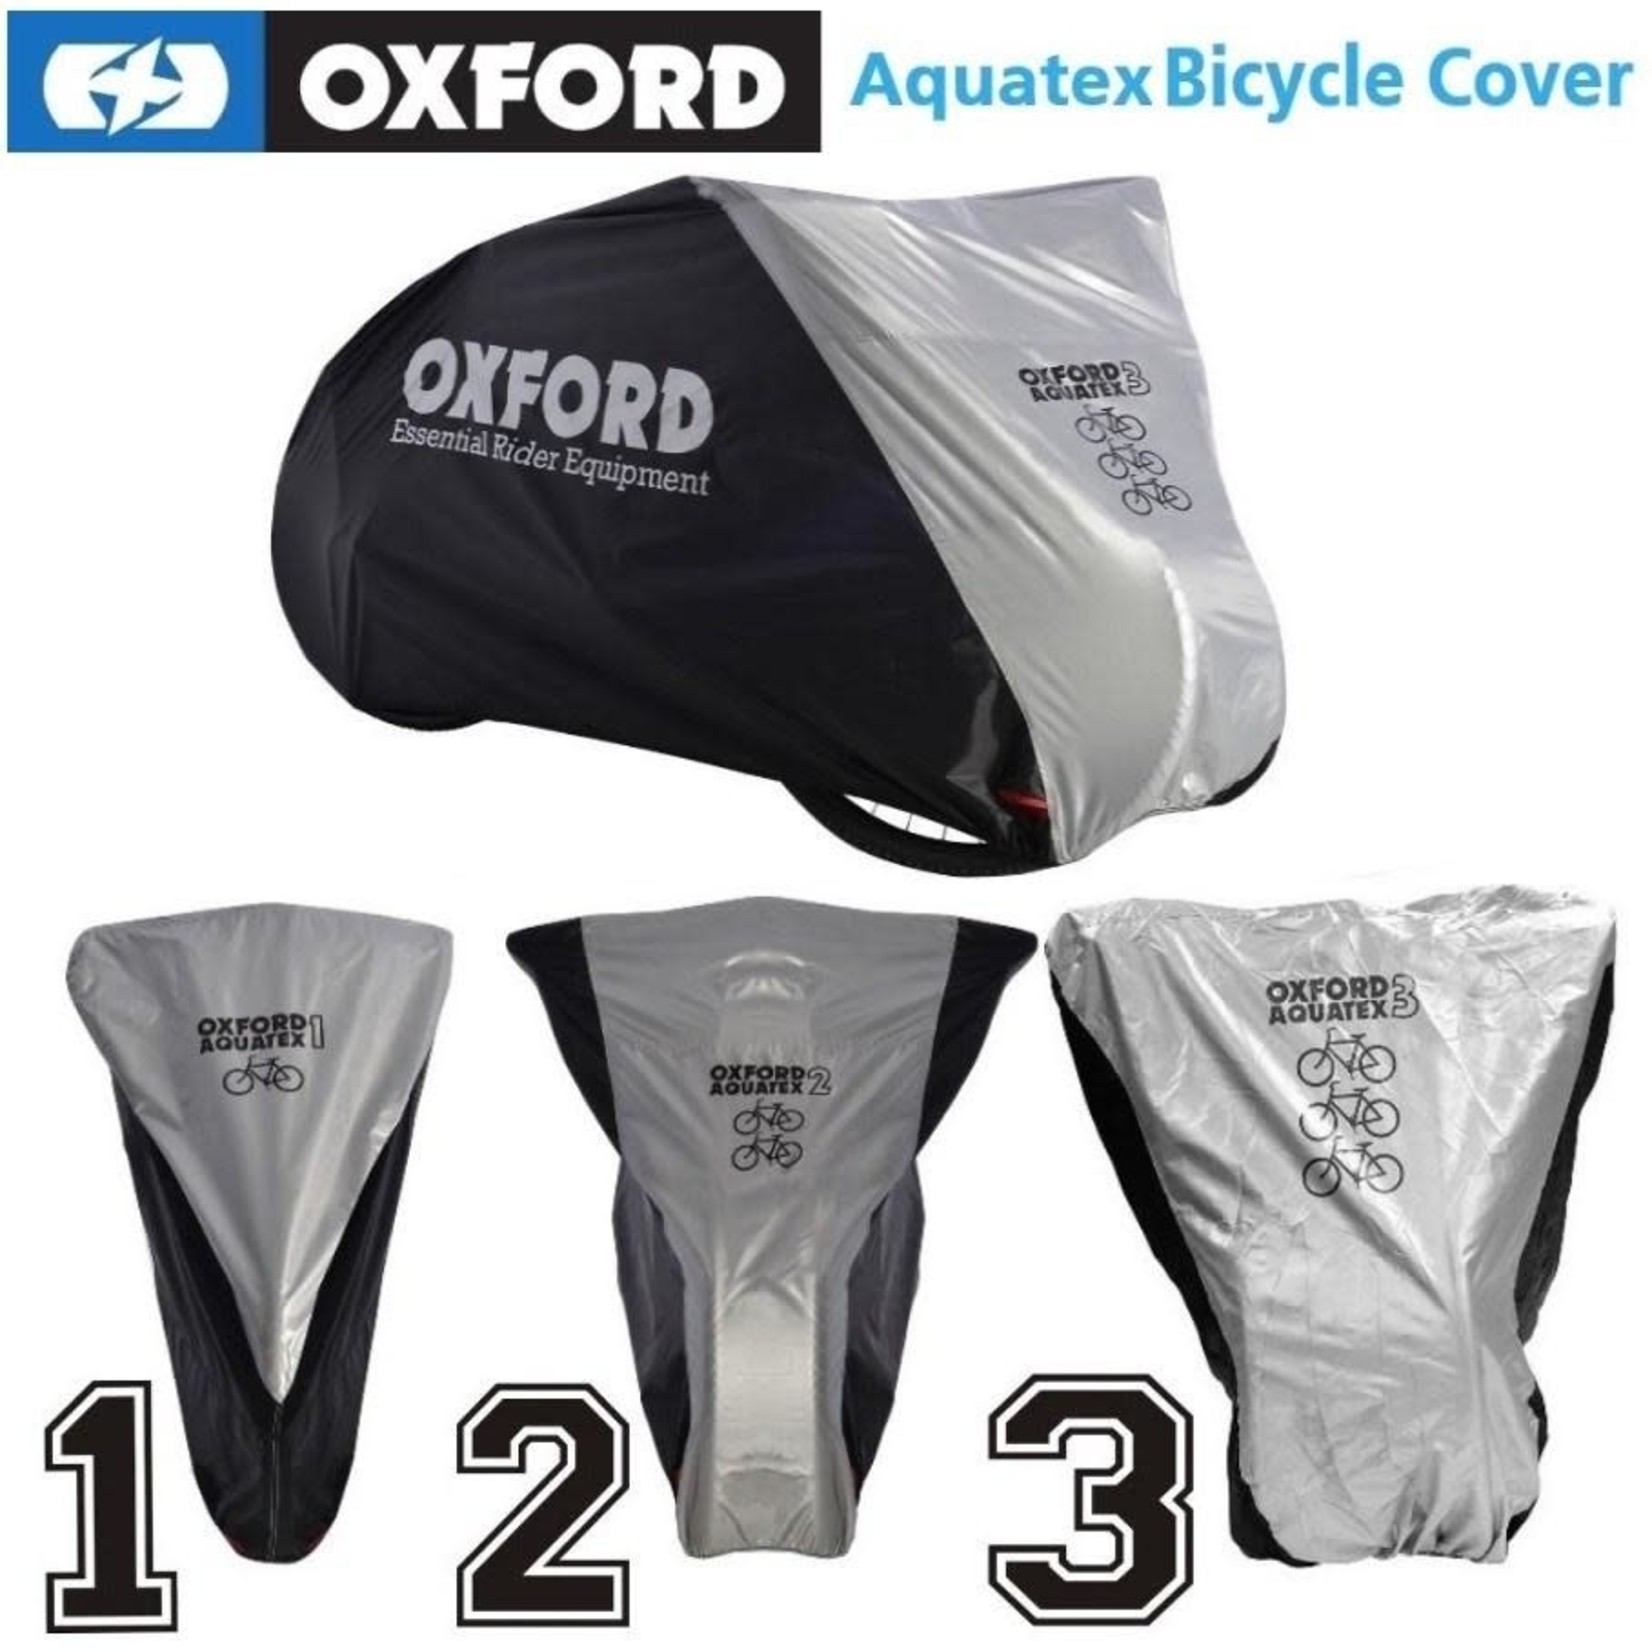 Oxford Aquatex Bicycle Cover -